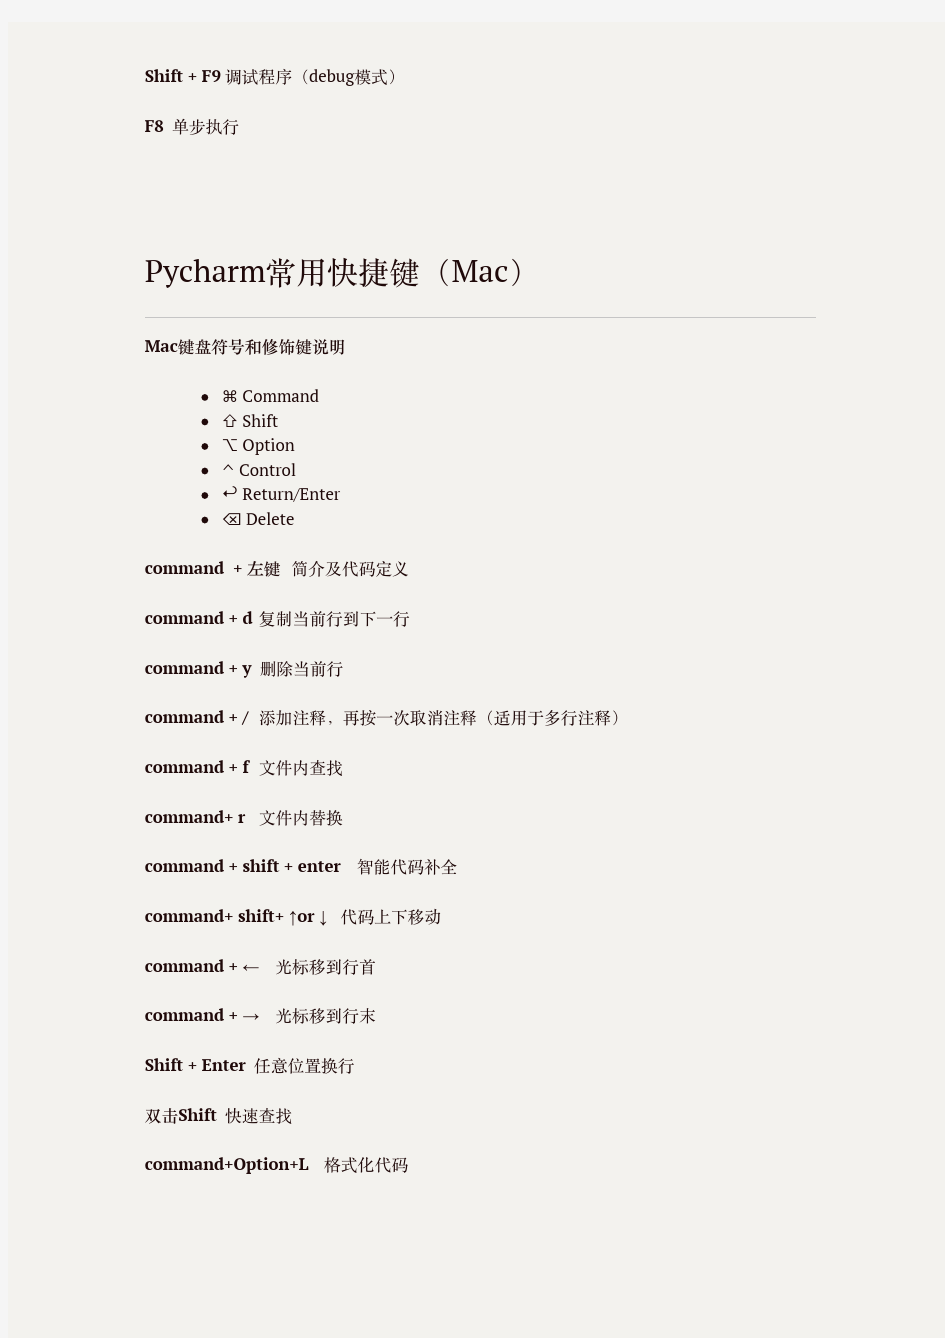 Pycharm快捷键大全(win mac)